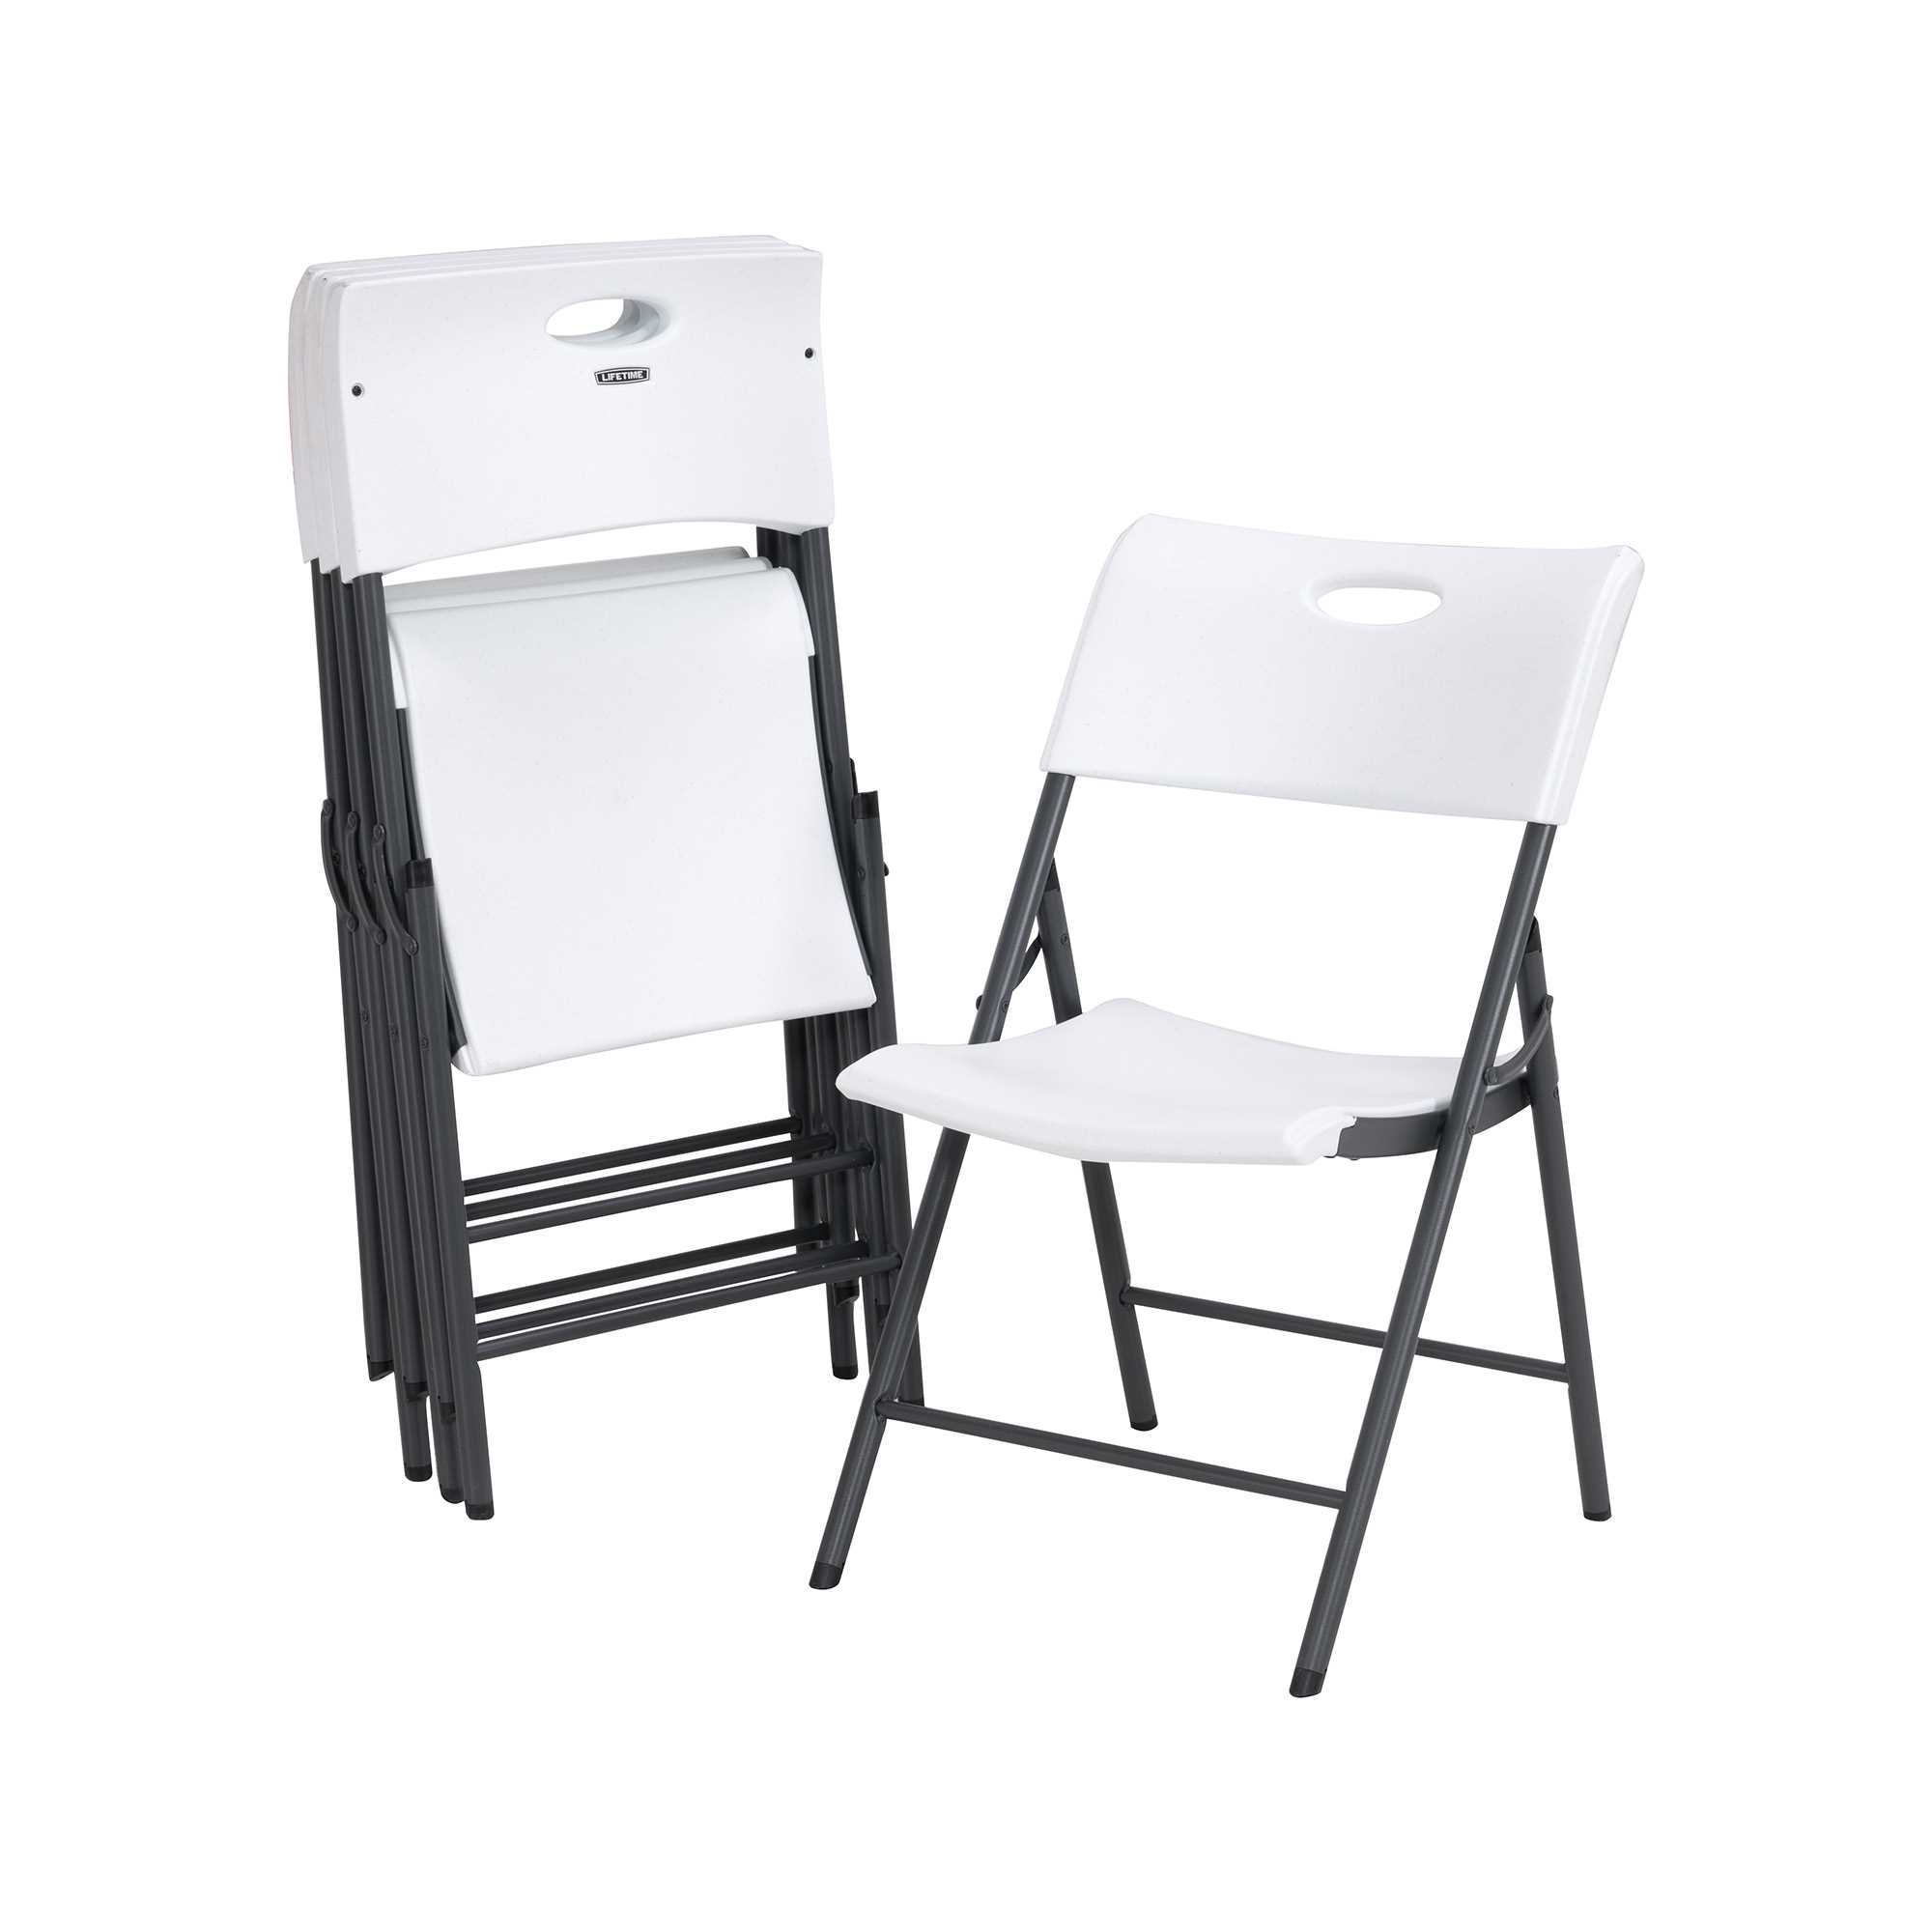 Light commercial folding chair  